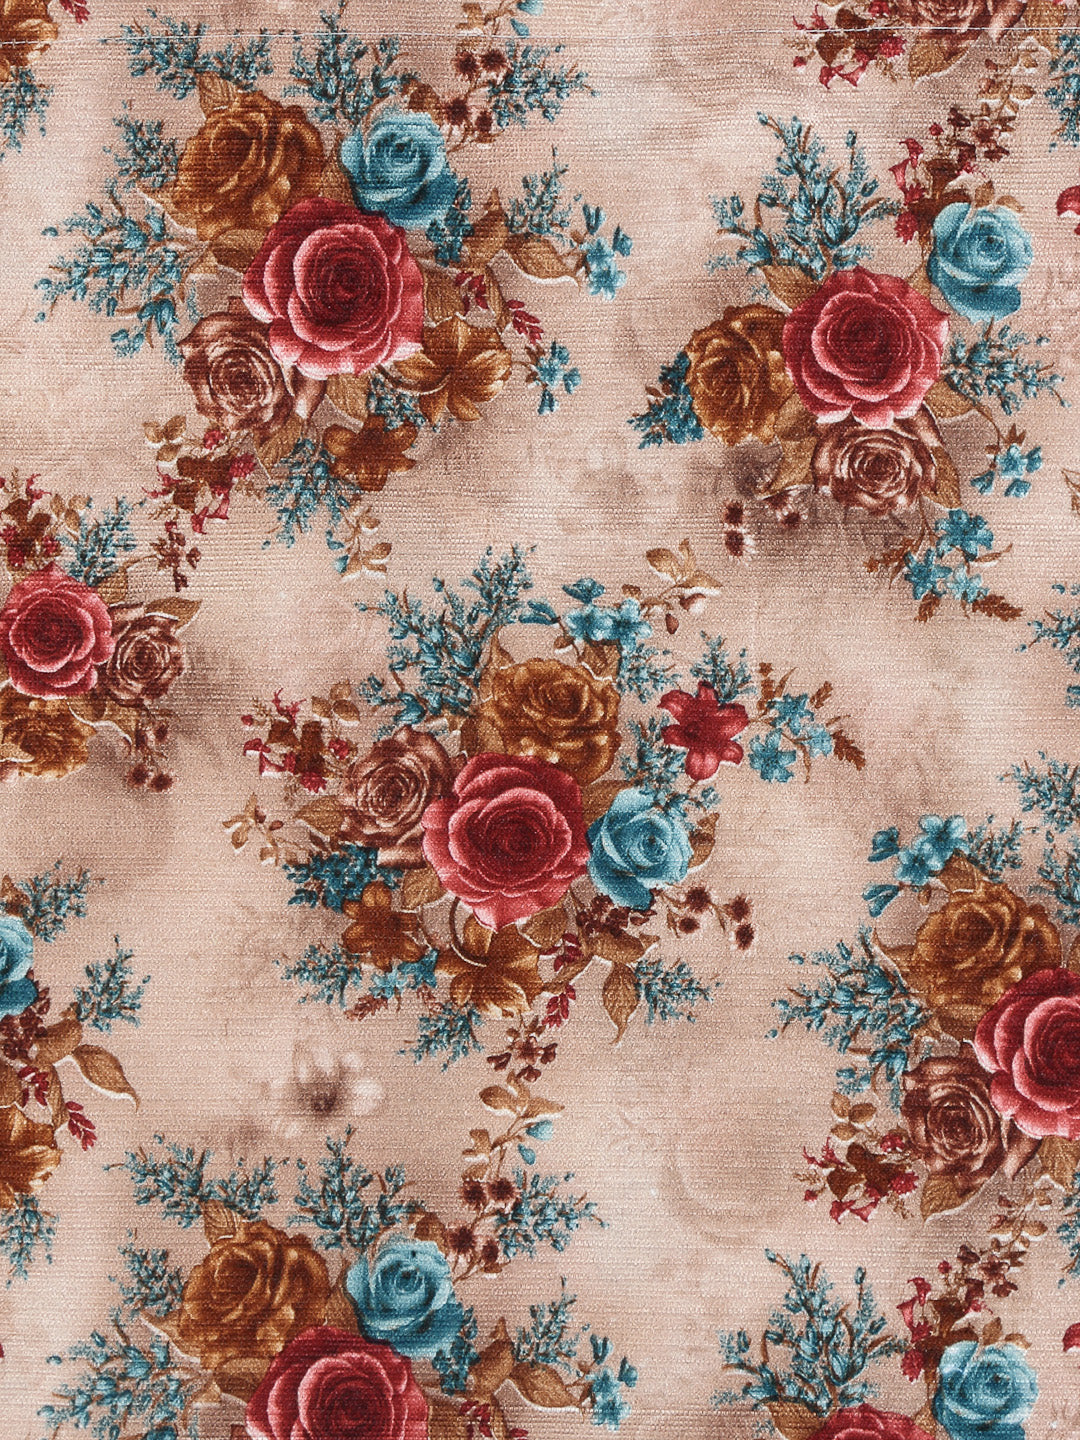 Arrabi Multi Floral TC Cotton Blend Cushion Covers (Pack of 5) (40 x 40 cm)